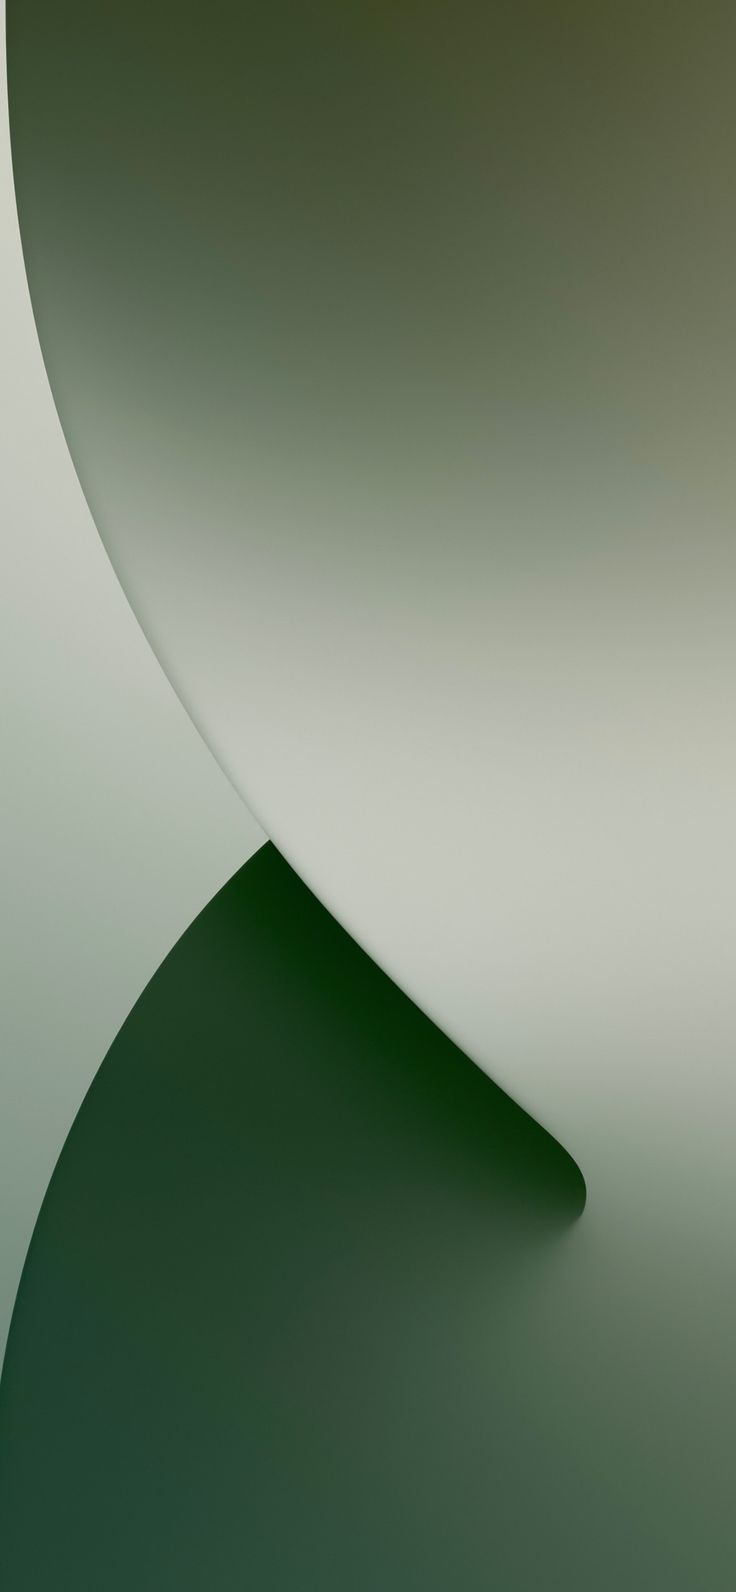 iOS 14 (Alpine Green Edition) Light. Phone screen wallpaper, Simple iphone wallpaper, iPhone wallpaper landscape